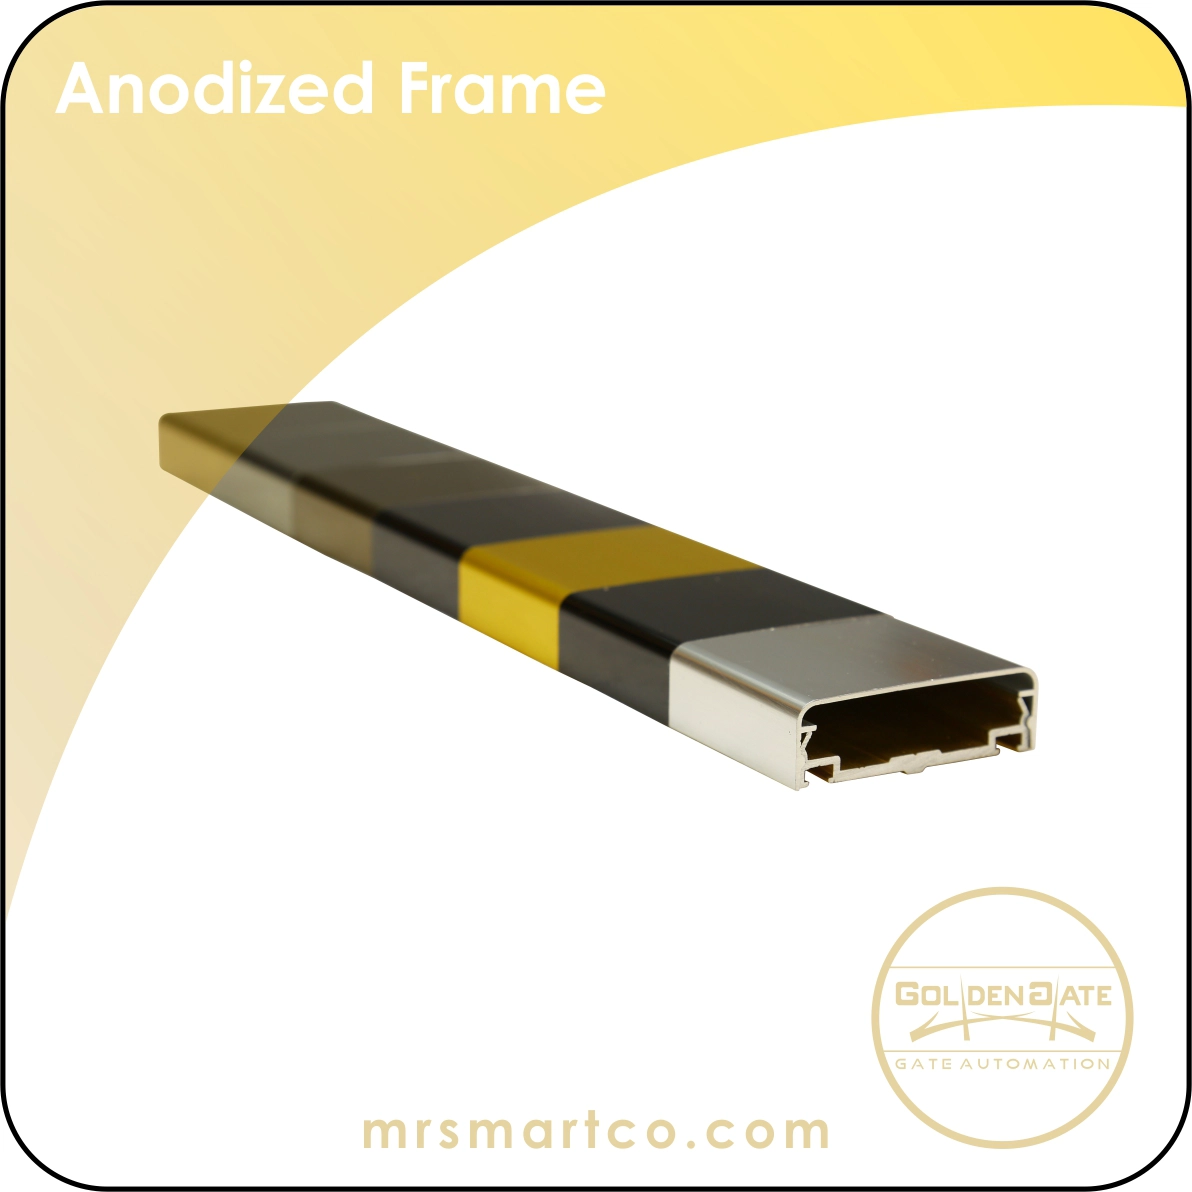 Anodized Frame